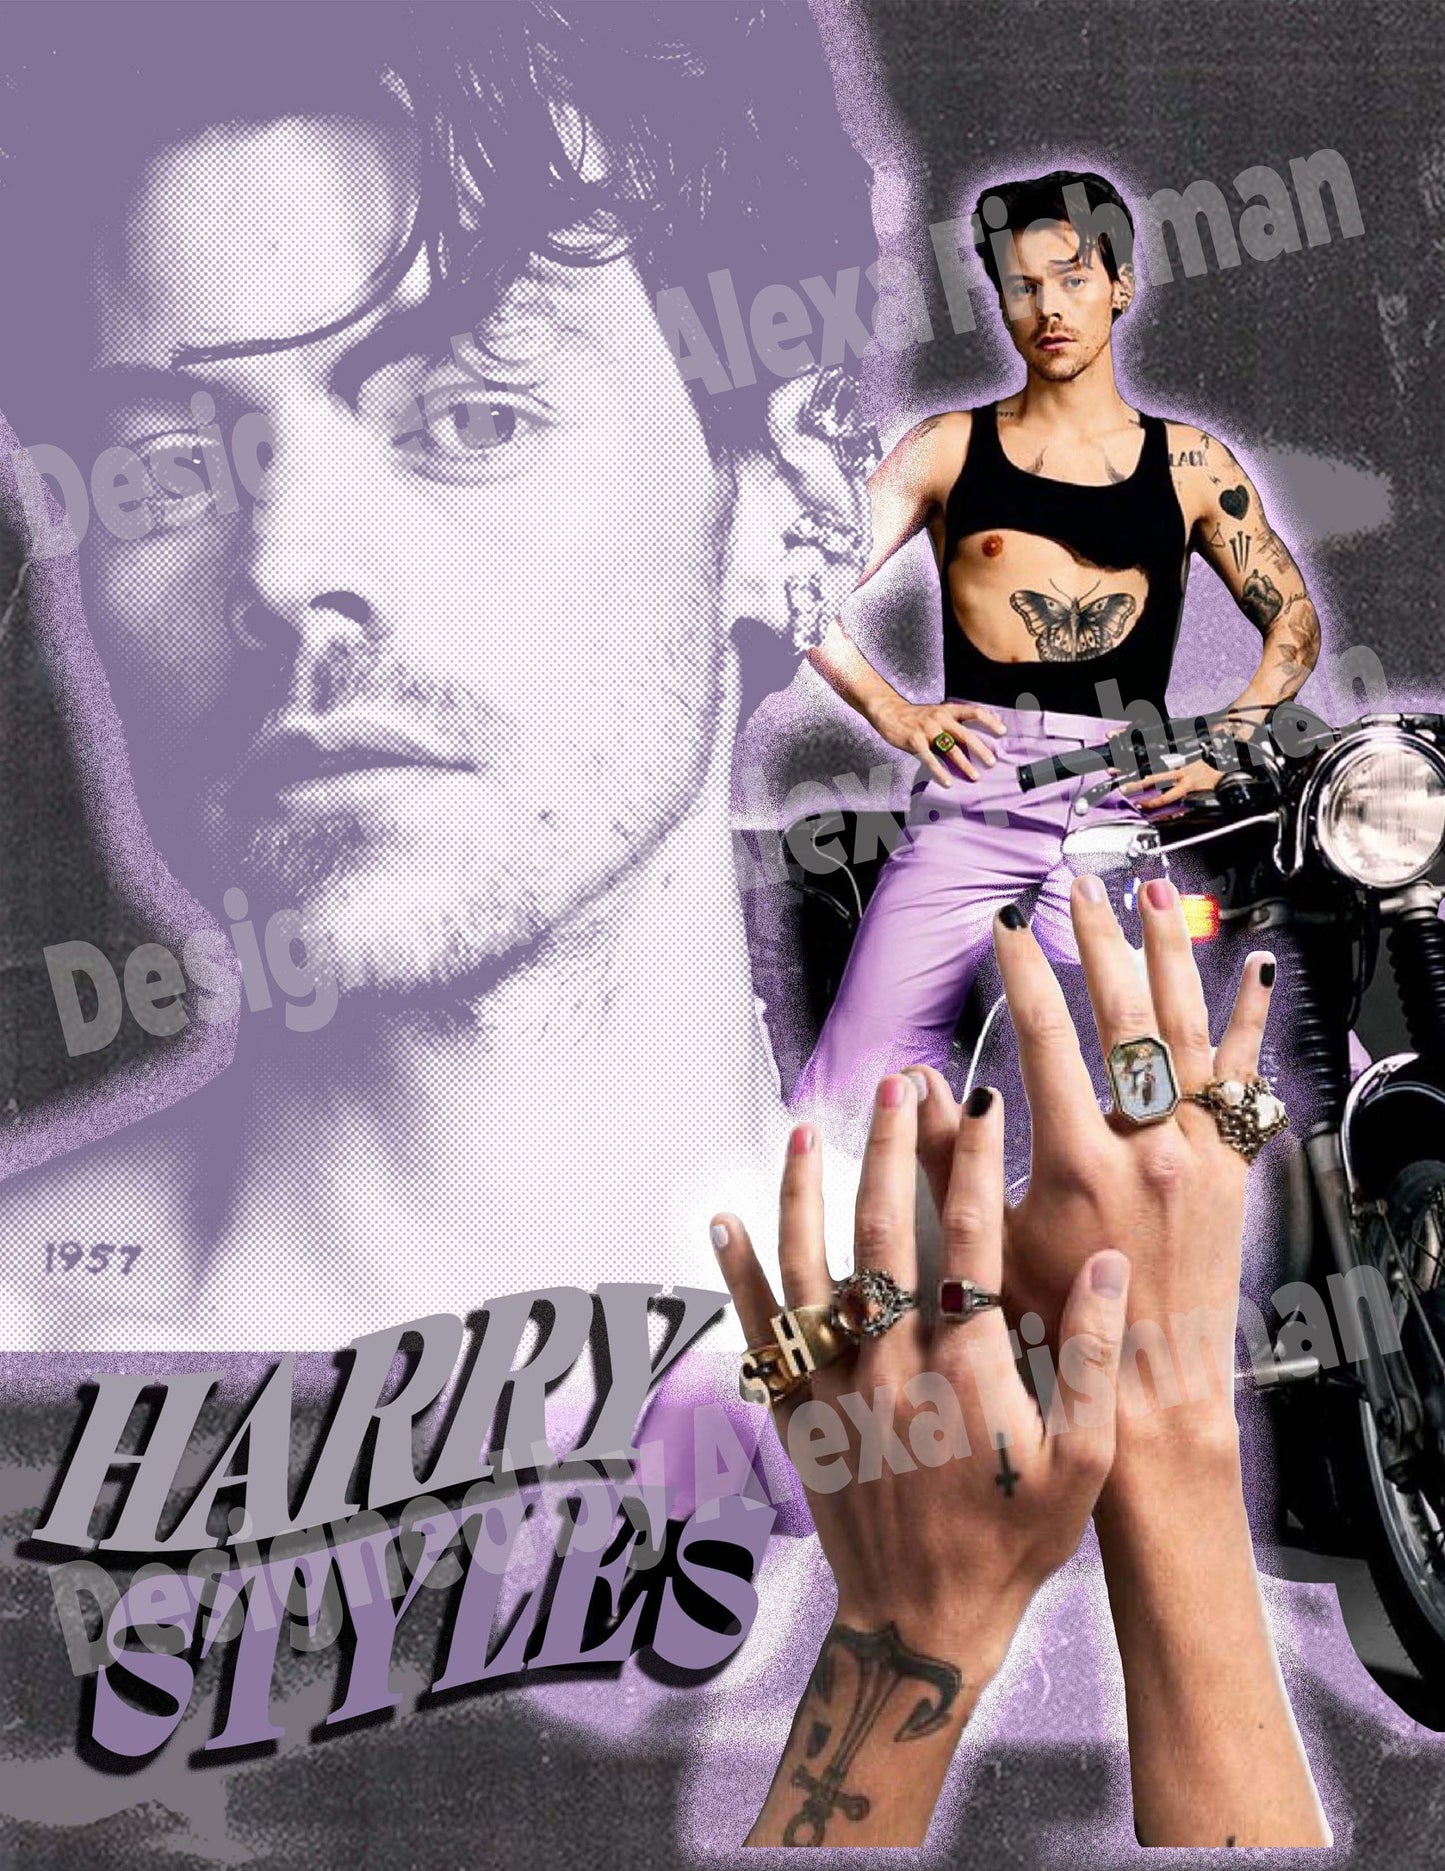 Harry Styles Pleasing for Dazed Magazine Photoshoot -8.5x11 Poster (Letter sized)